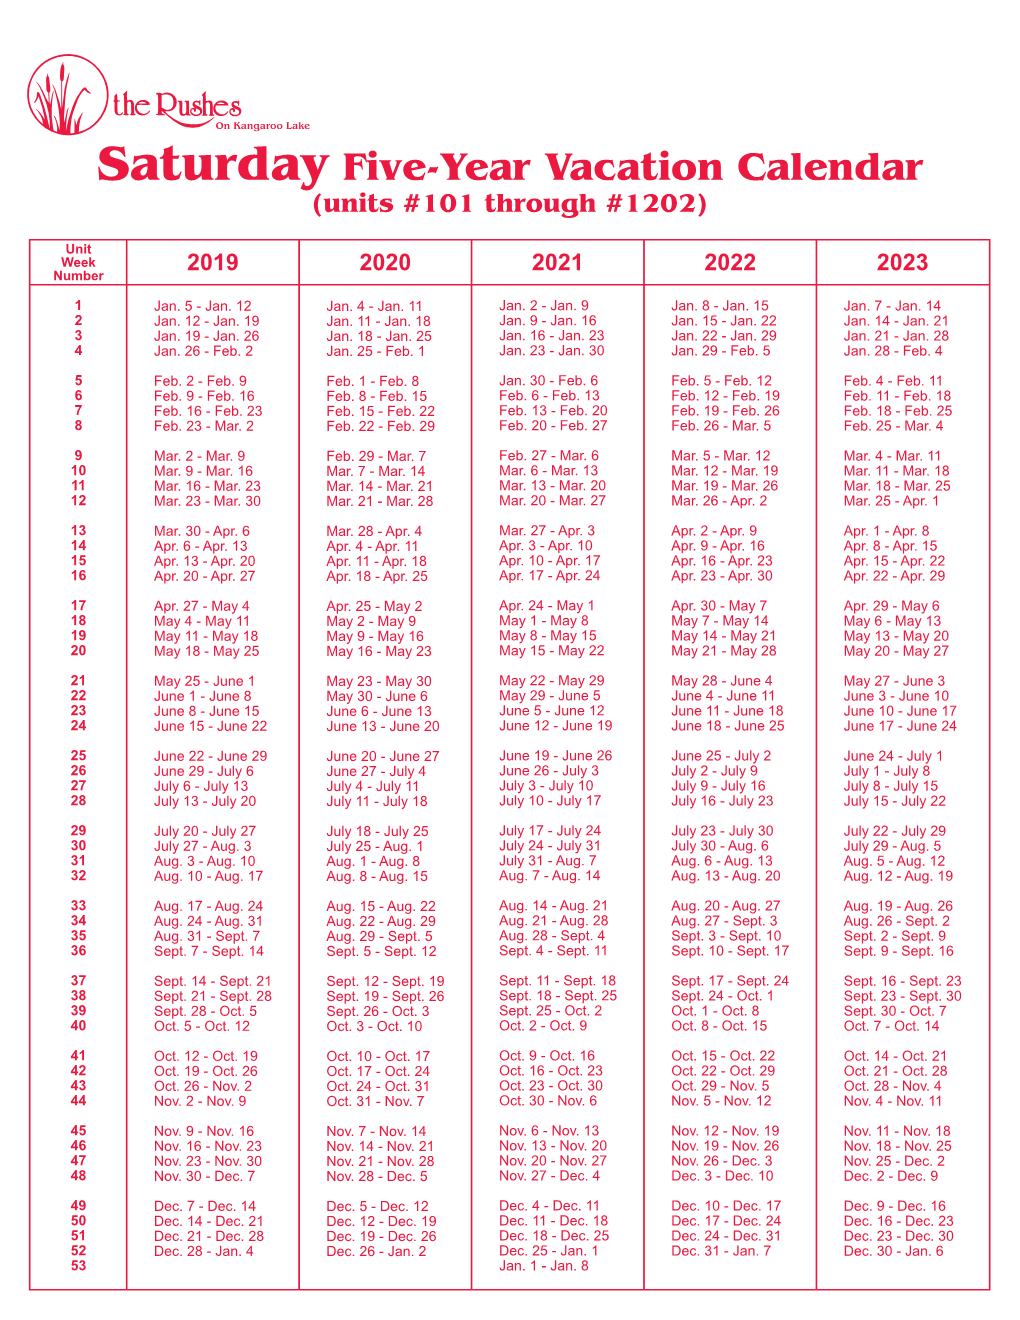 Saturday Five-Year Vacation Calendar (Units #101 Through #1202)